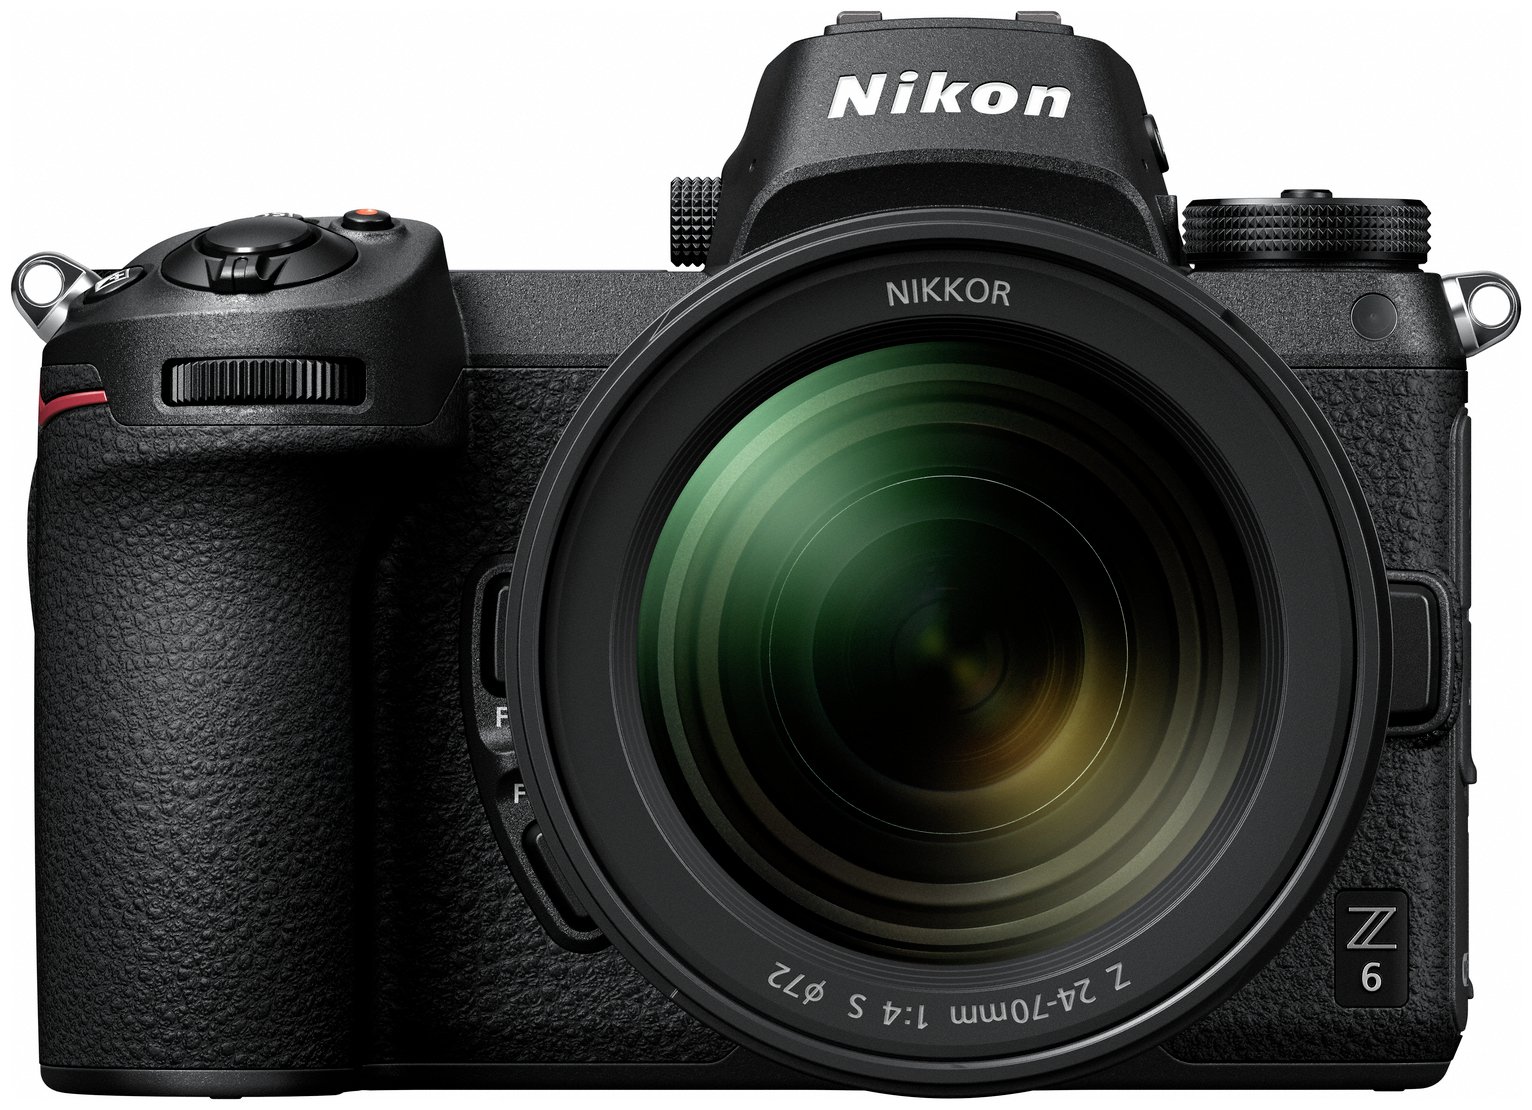 Nikon Z6 Mirrorless Camera with Z 24-70mm Lens Review